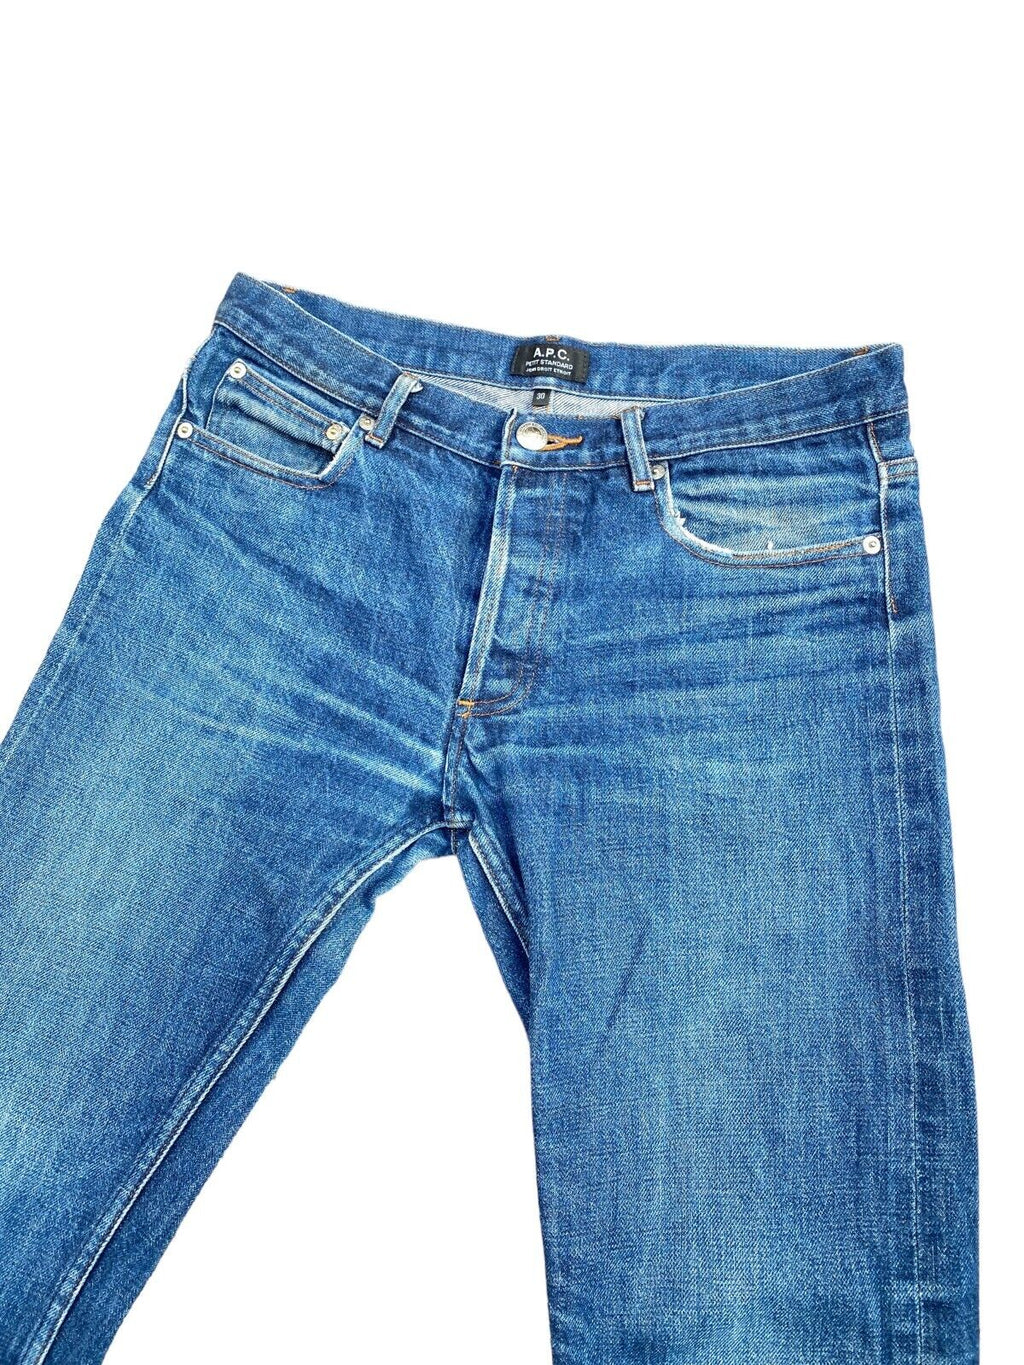 Butler Petit Standard Blue Denim Jeans  - - Size 30 APC